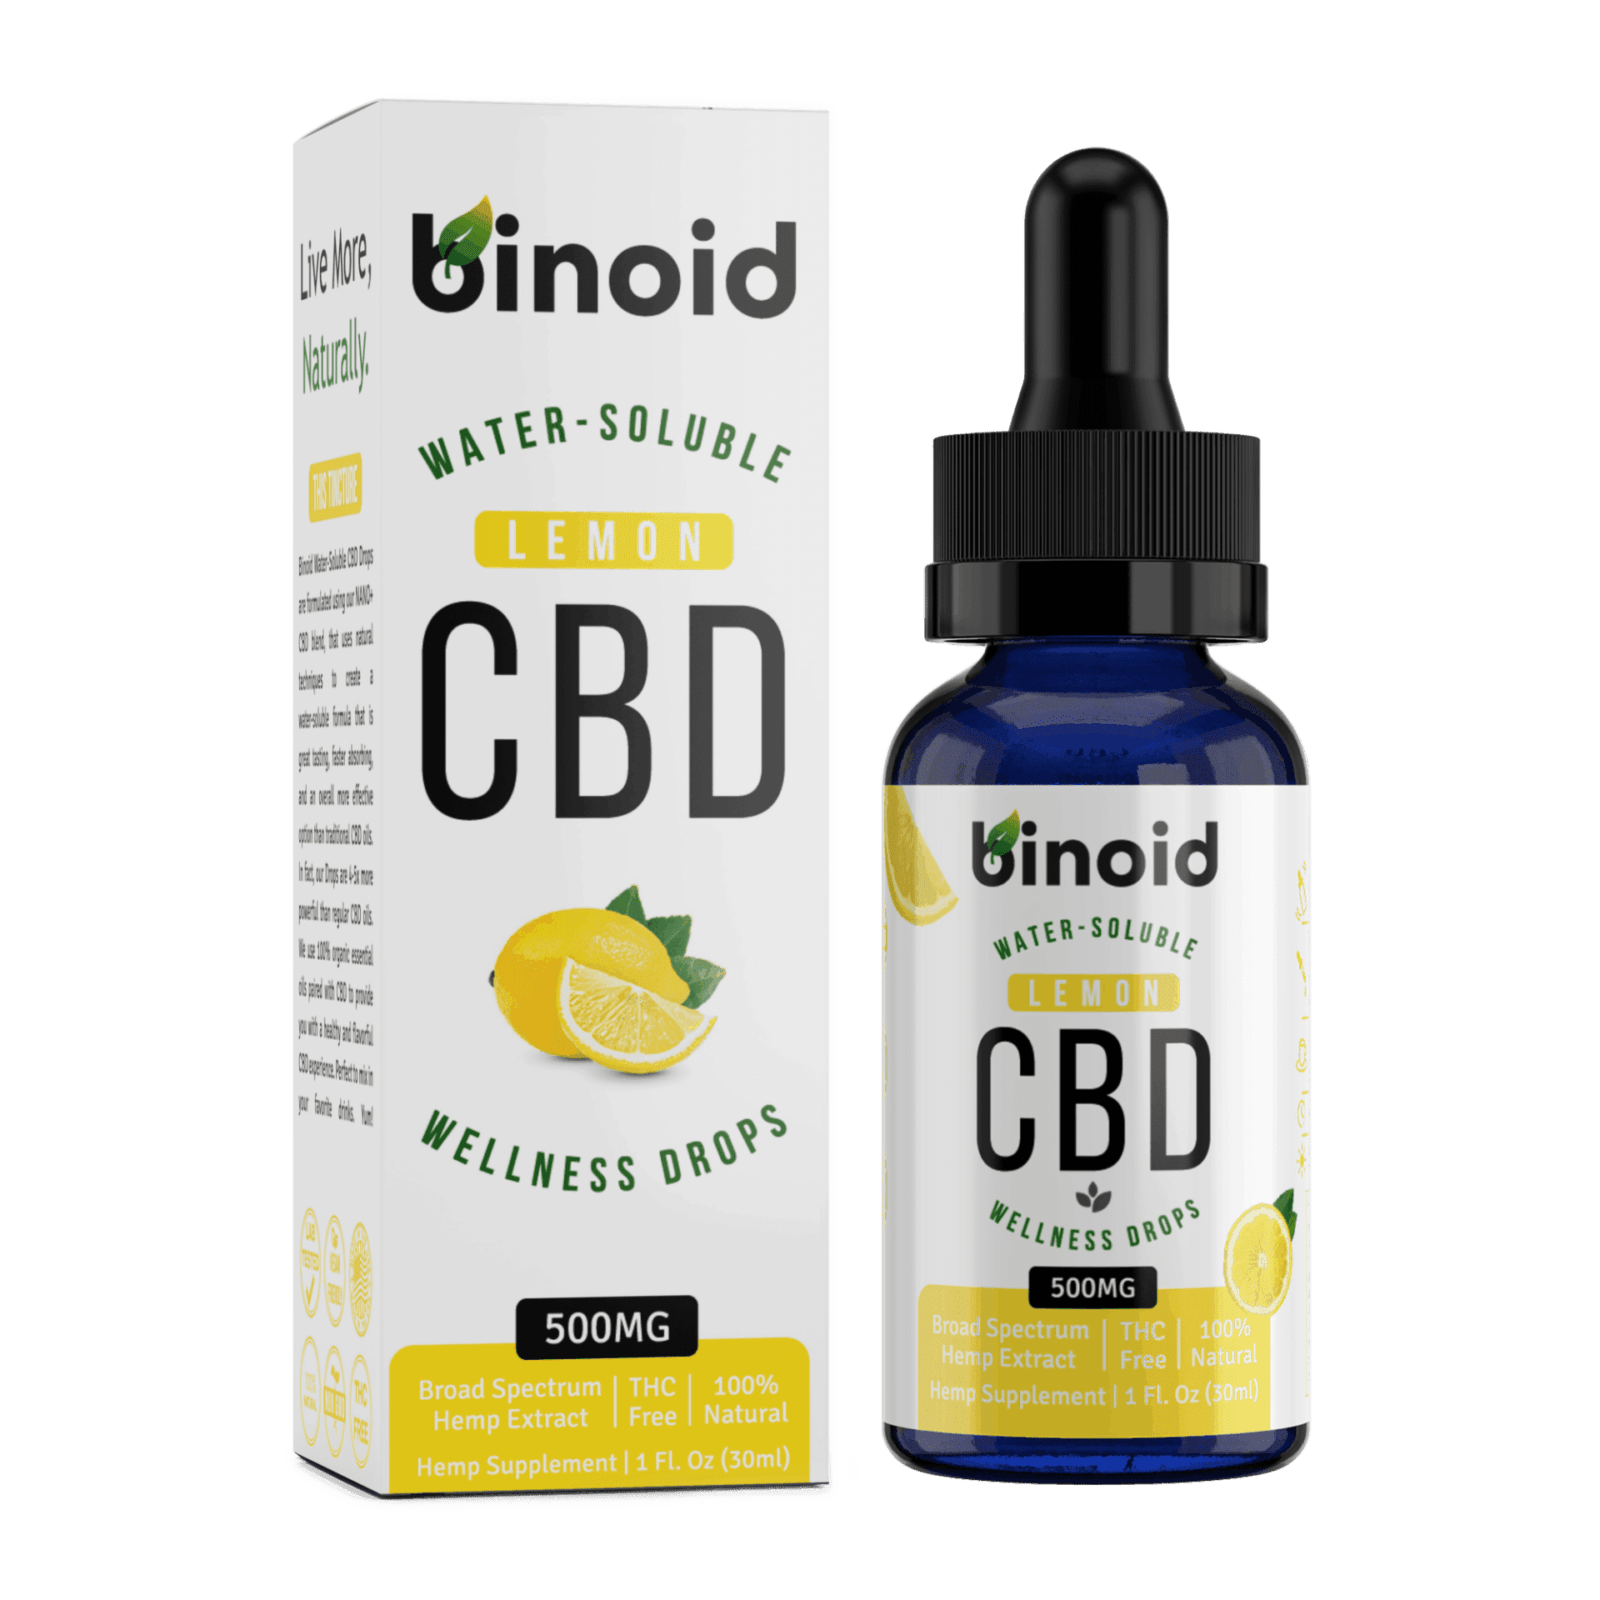 Binoid Water-Soluble CBD Drops - Lemon